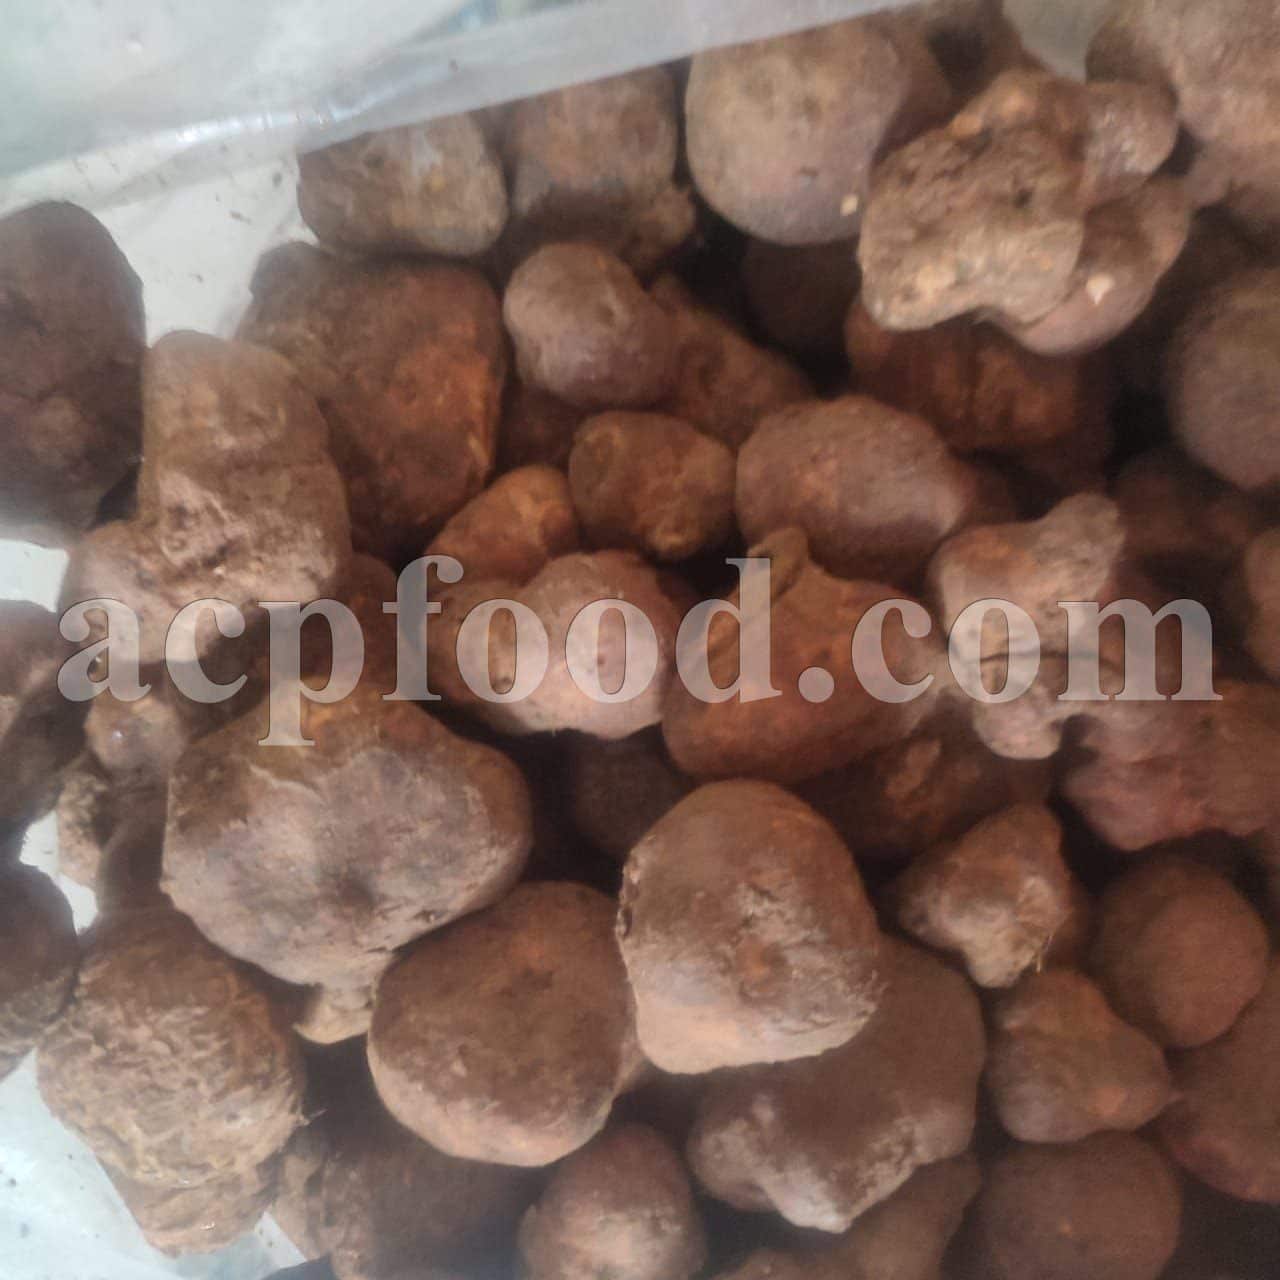 Tuber melanosporum mushrooms for sale. Truffles Wholesaler, Supplier, Exporter and Provider. Buy High Quality Black Truffles and mushrooms with the Best Price.